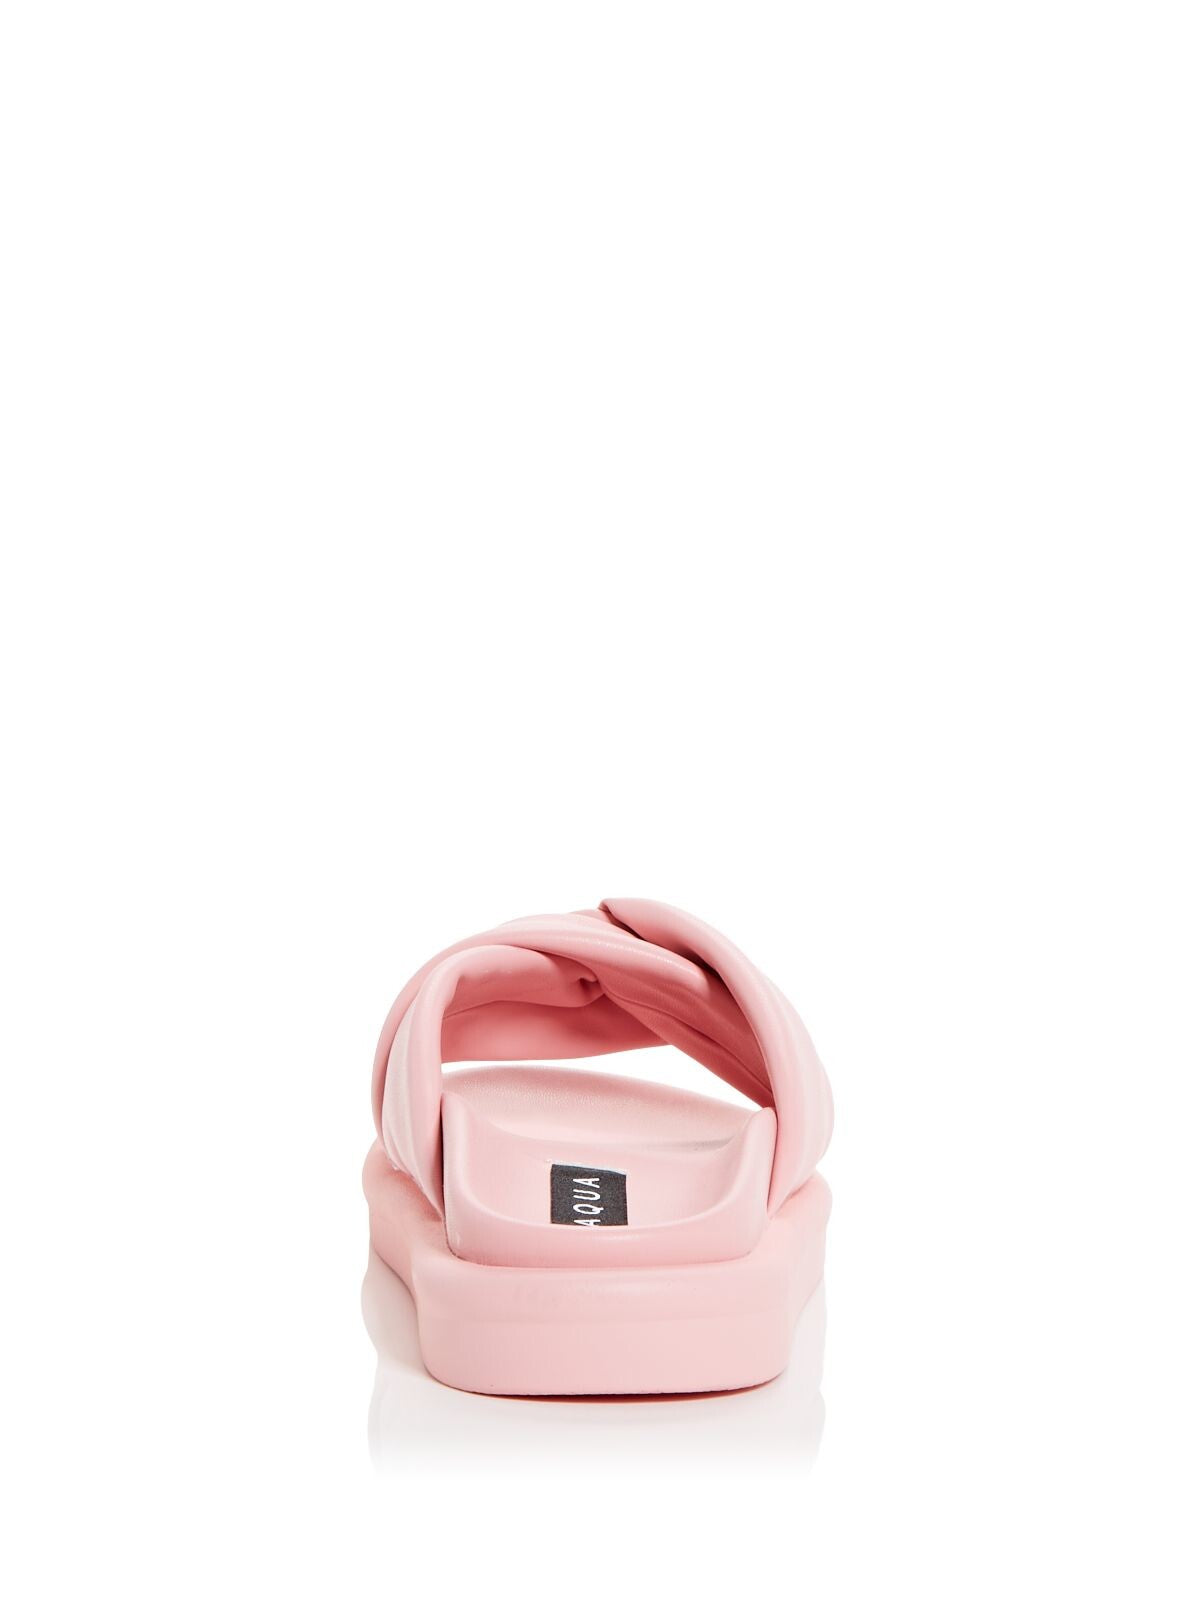 AQUA Womens Pink Knotted Comfort Ryle Round Toe Platform Slip On Slide Sandals Shoes 10 M